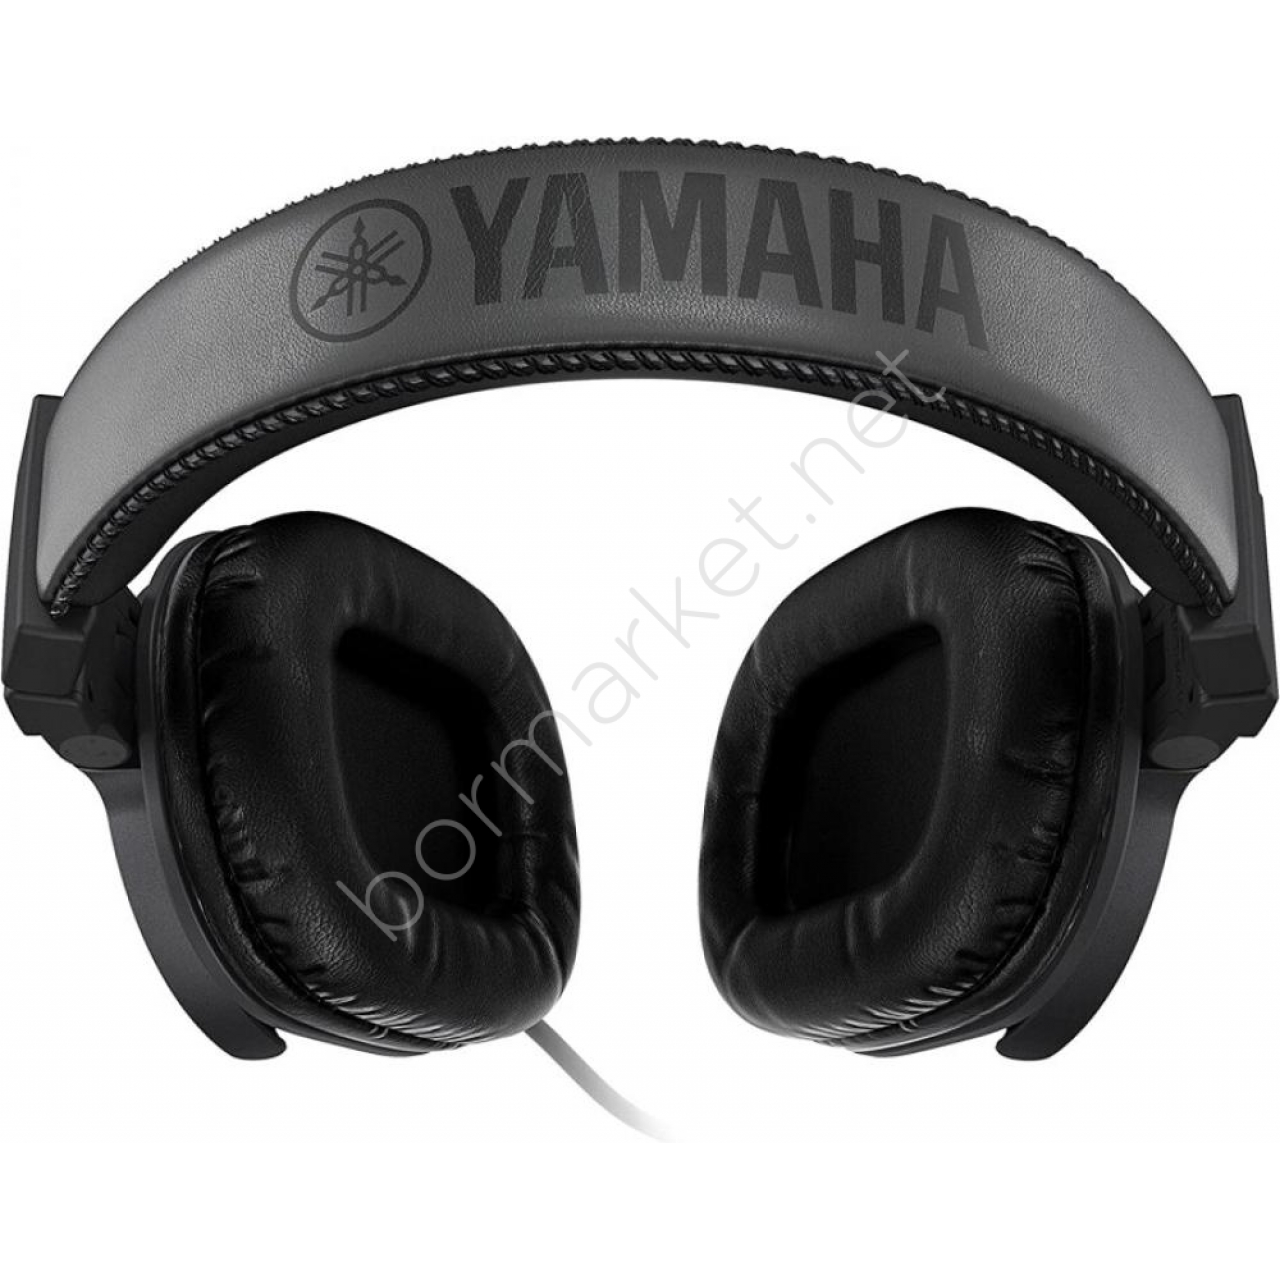 Yamaha HPH-MT5 Referans Monitör Kulaklık - YAMAHA HPH-MT5 STUDIO REFERANCE HEADPHONES